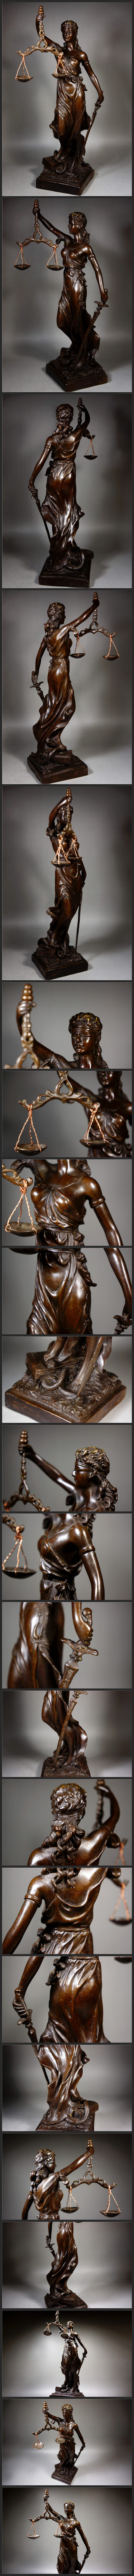 買付商品細工銅製 ギリシア神話 正義の女神 テミス造像高彫 鎮宅開運置物 極上質 高29.5cm 1.45kg 仏像